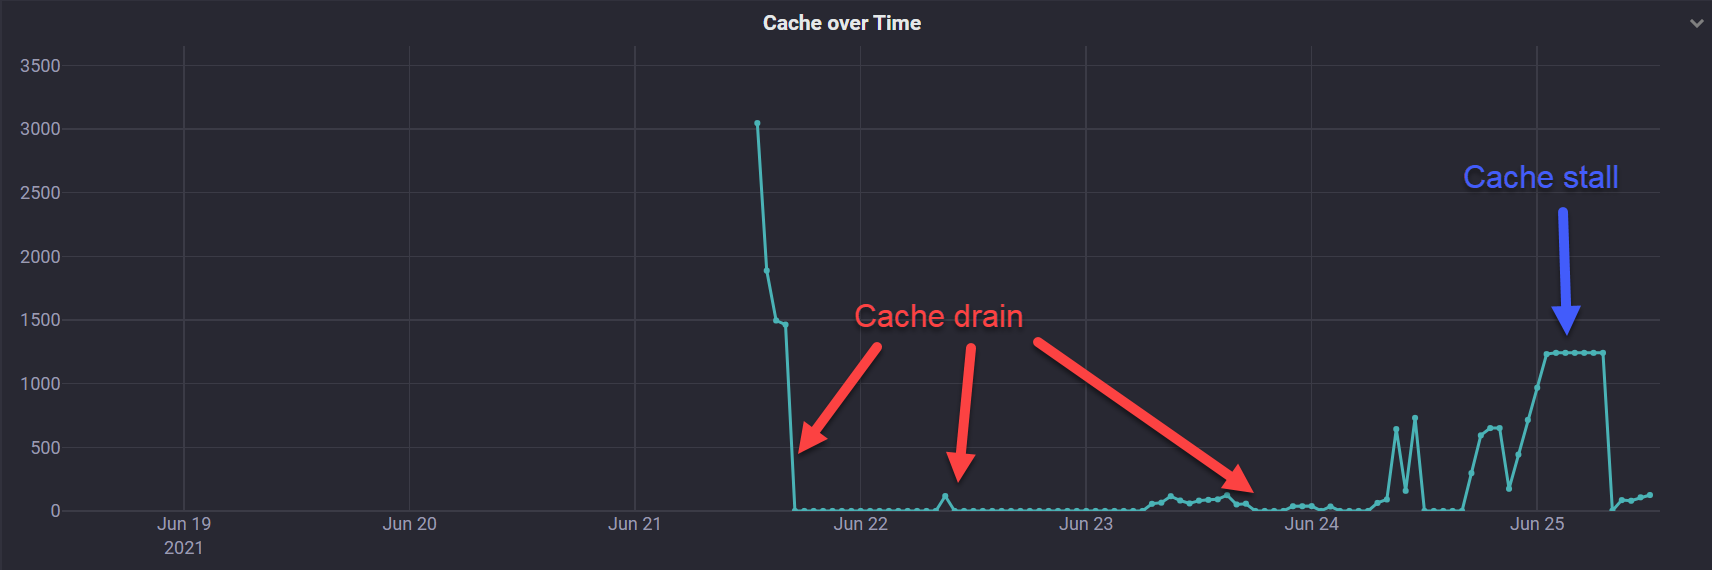 Cache drain and cache stall behaviour